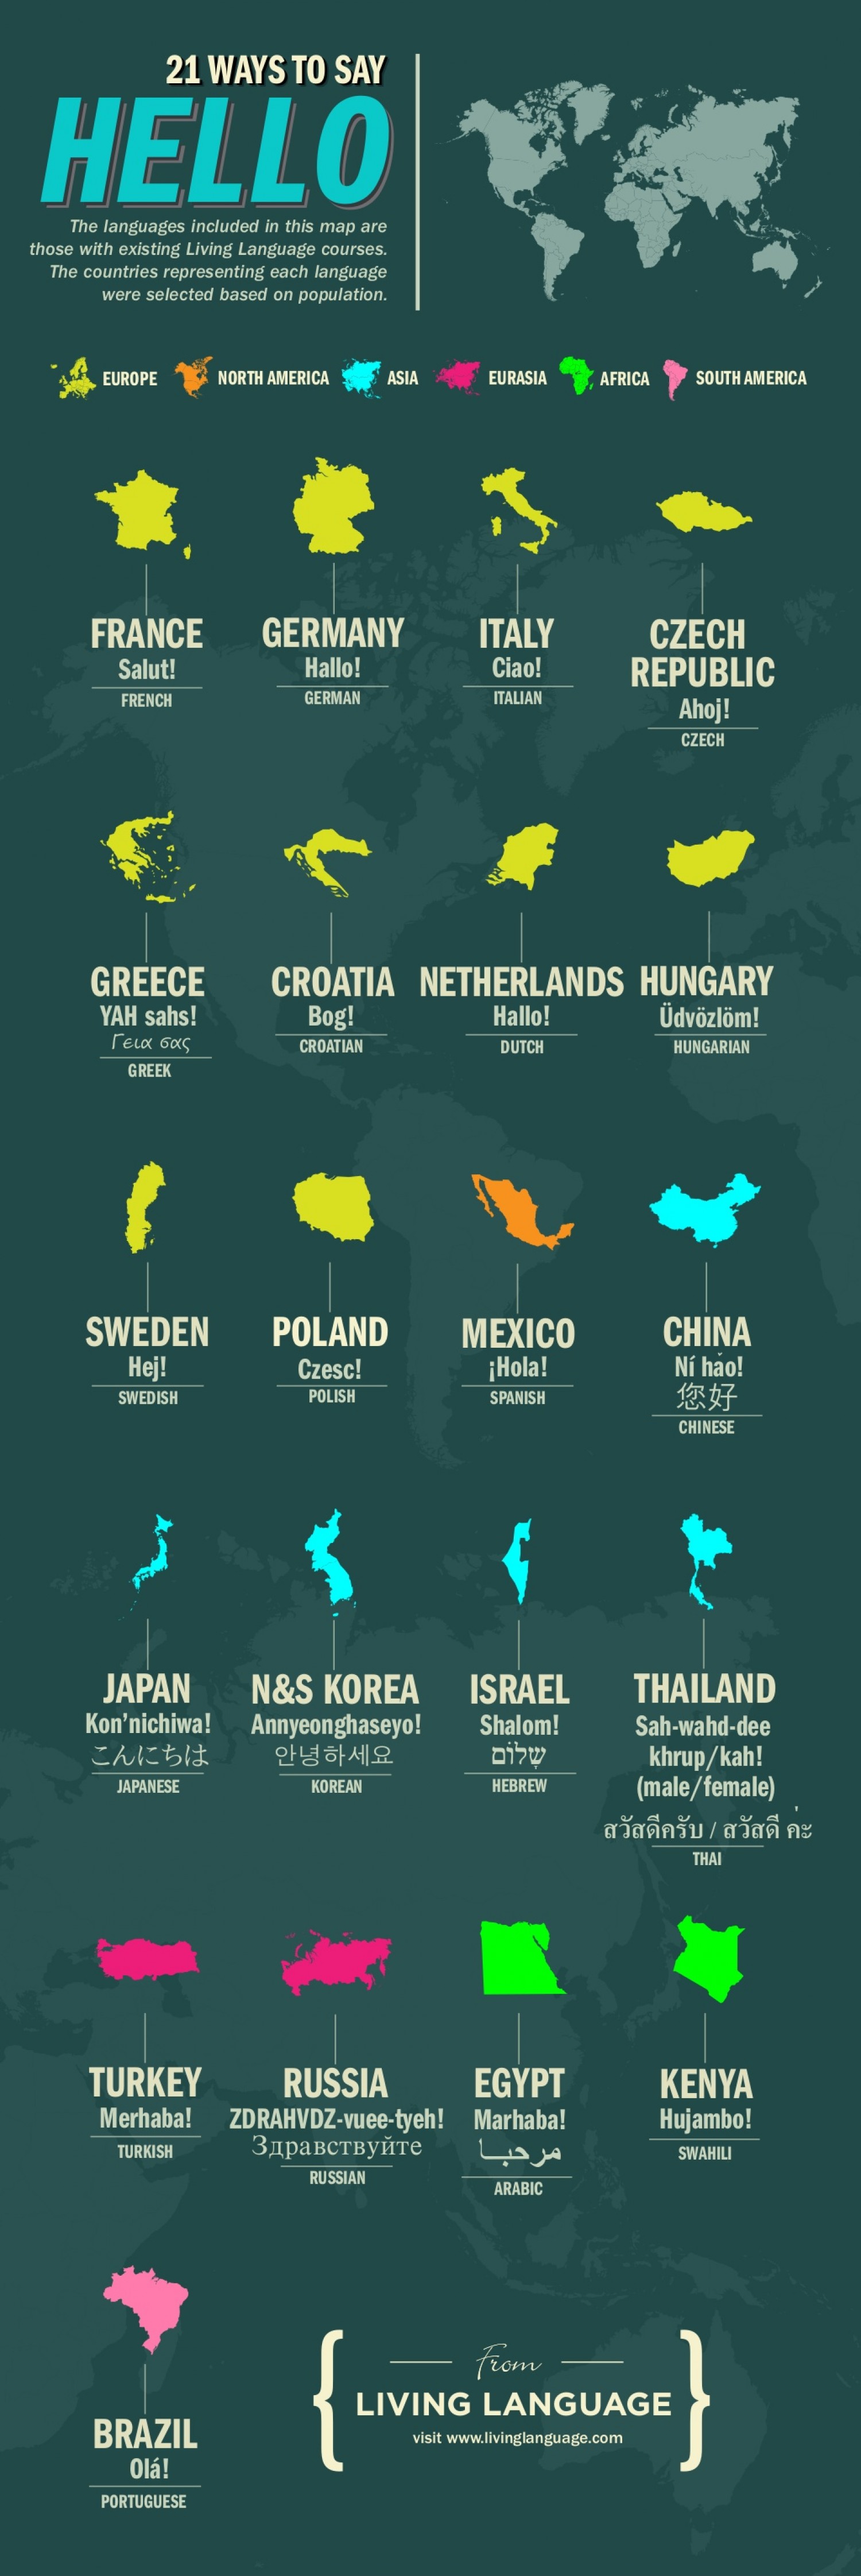 Infografía para decir "Hola" en 21 idiomas